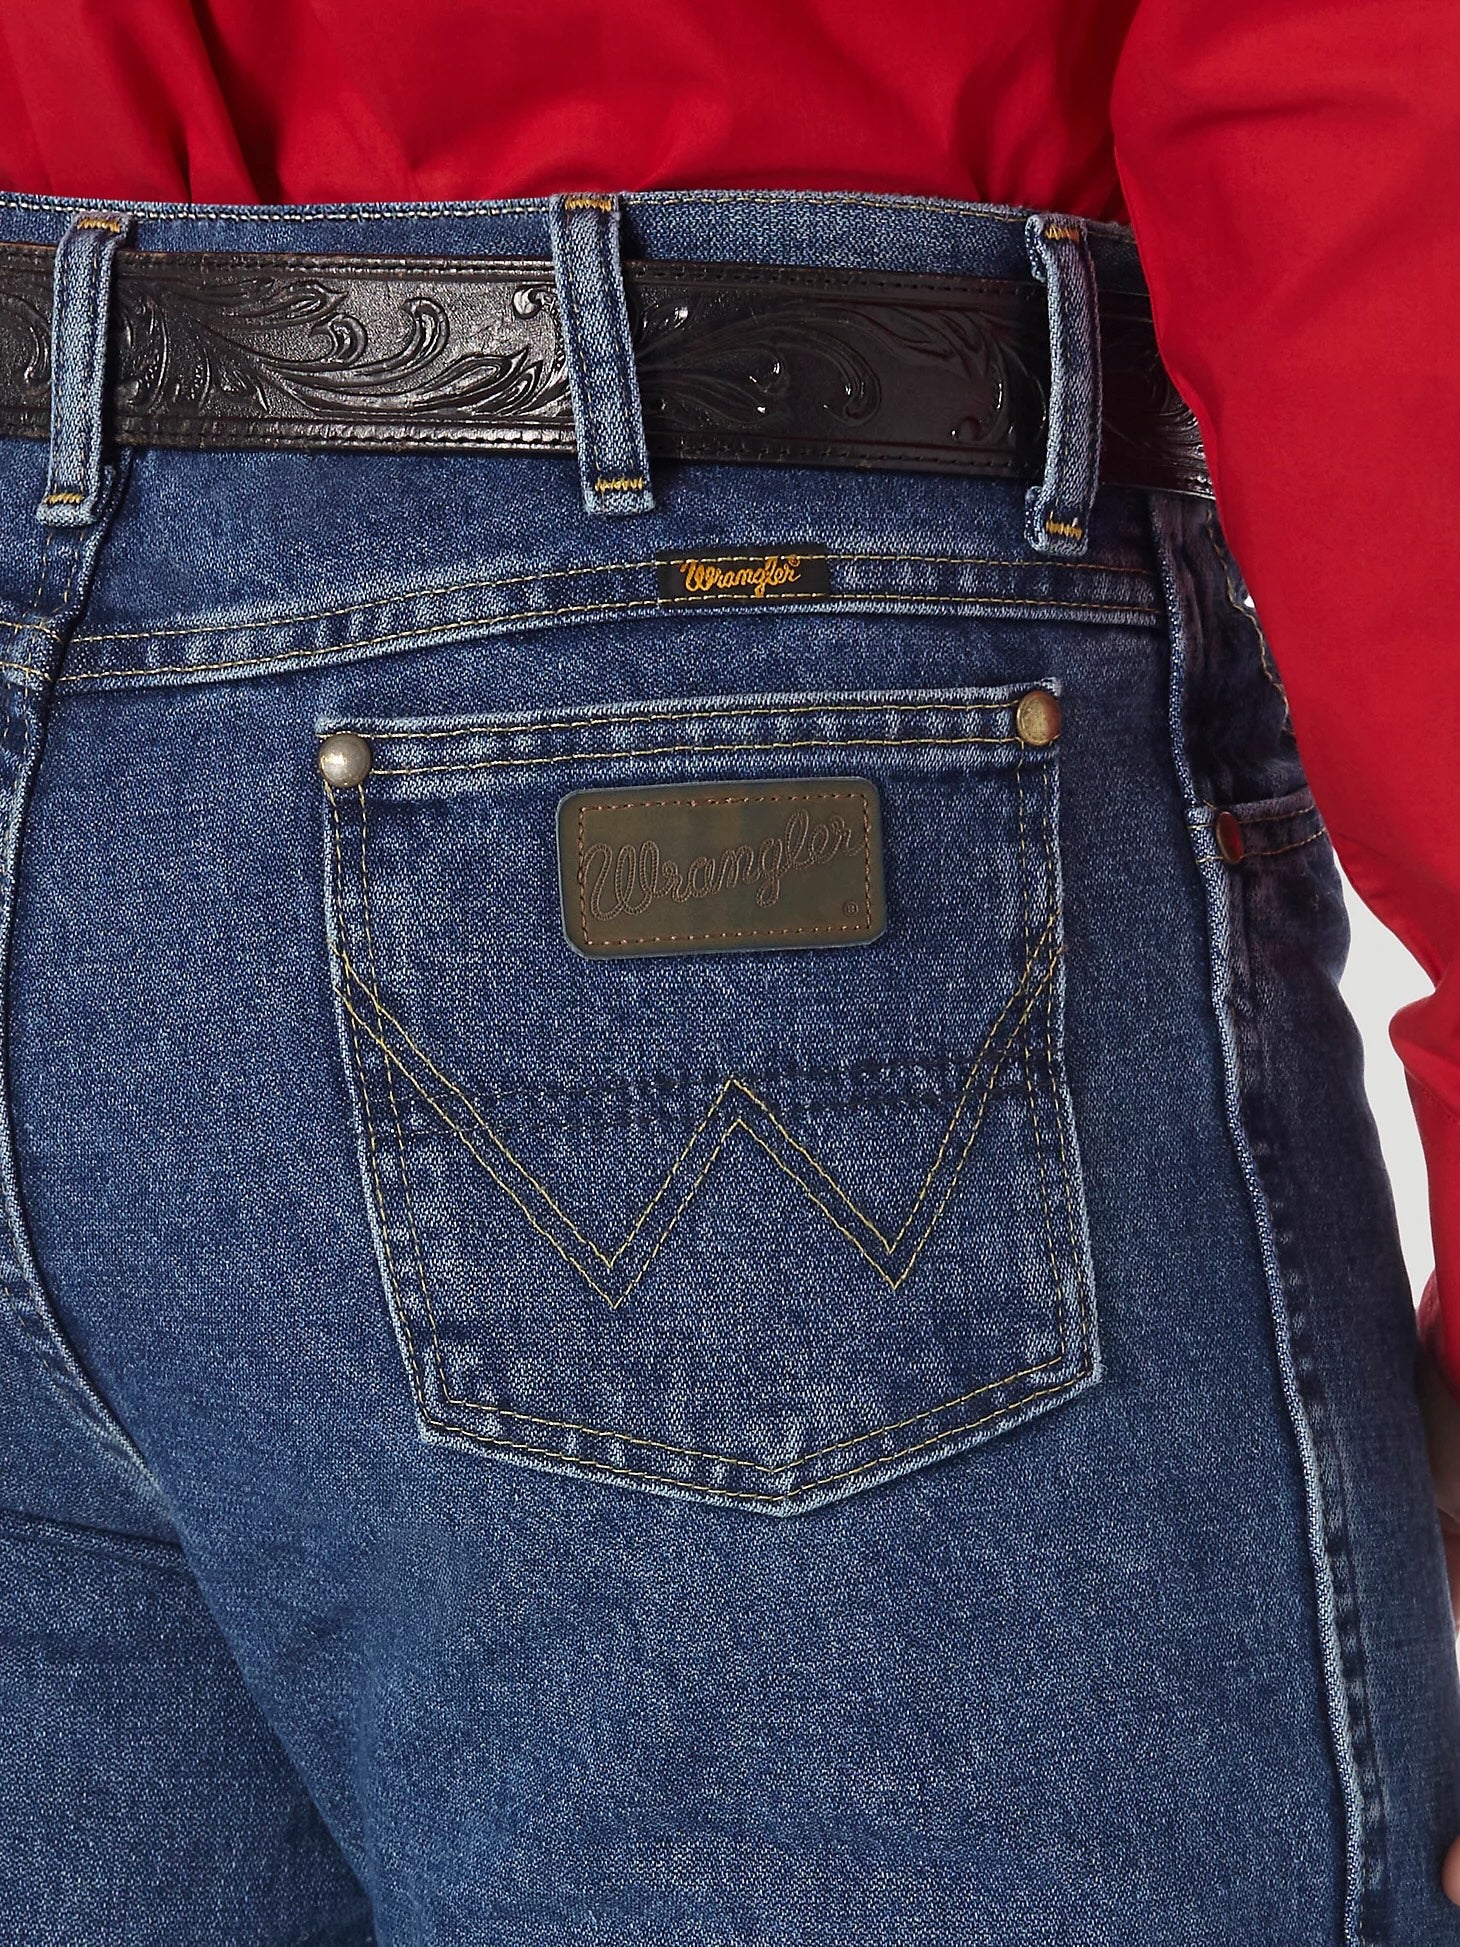 Wrangler® Cowboy Cut® Rigid Slim Fit Jean in Rigid Indigo